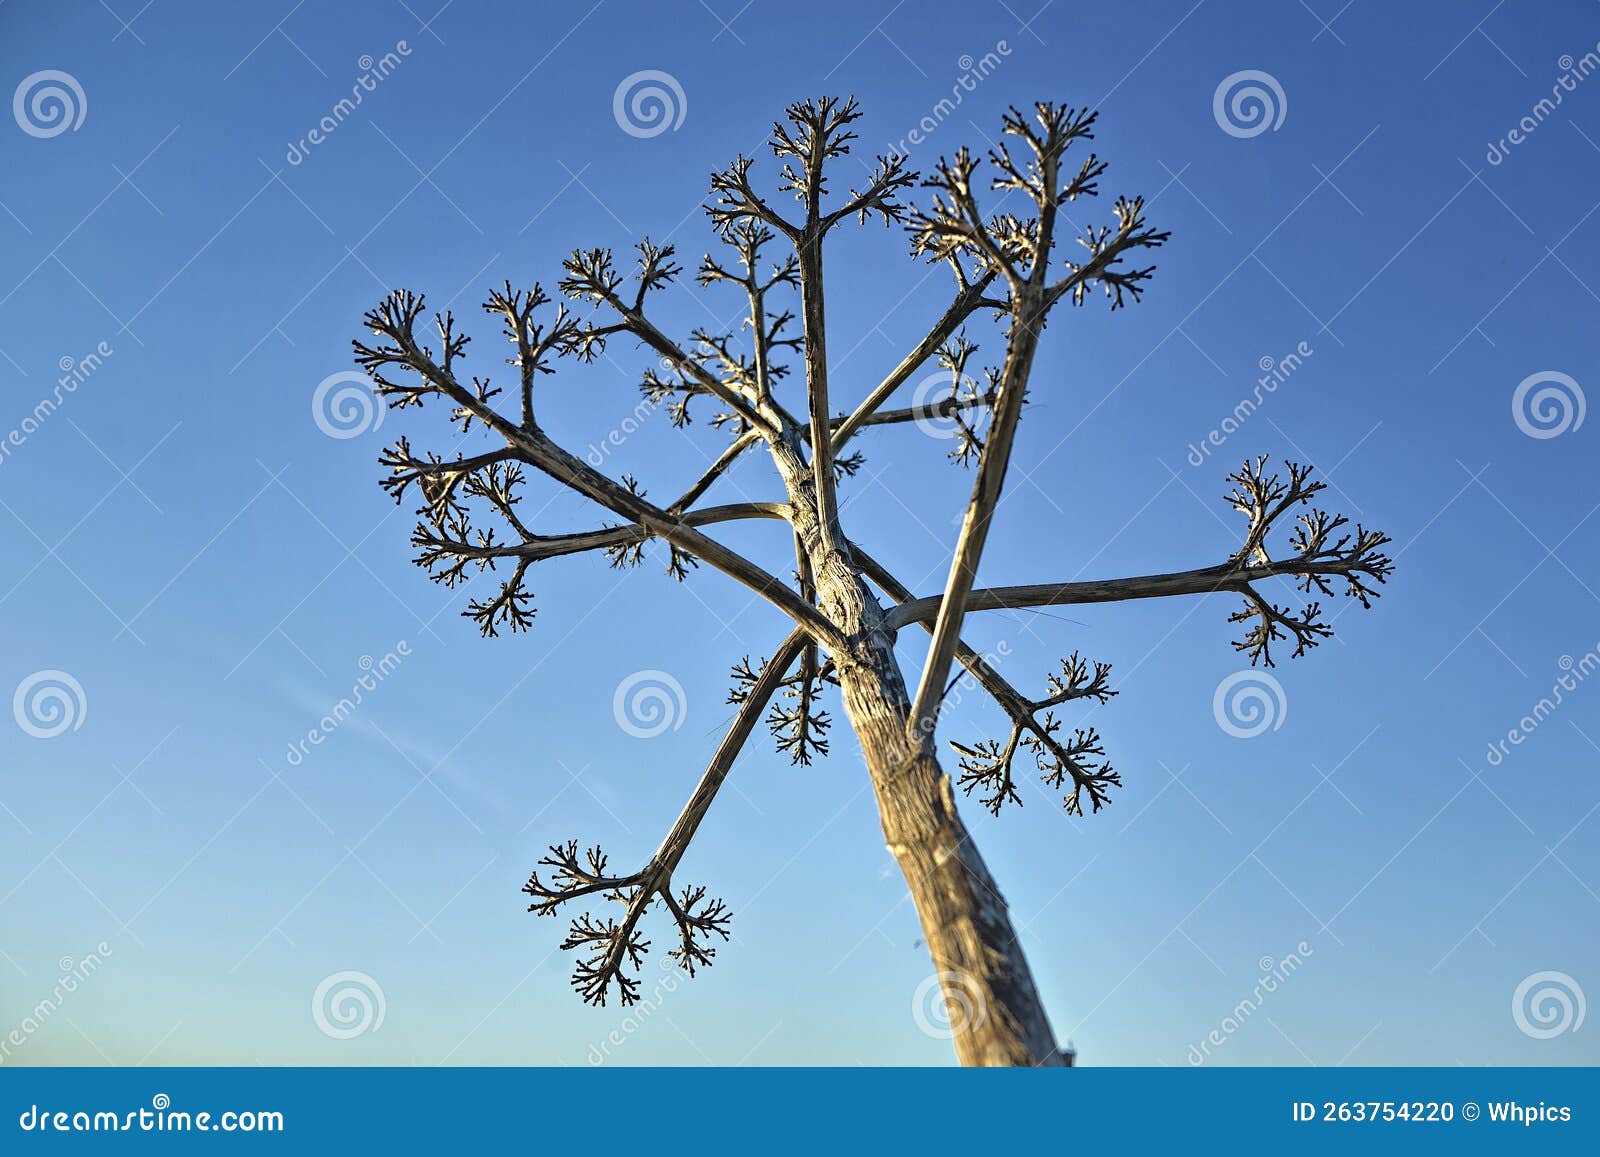 dry agave stem over blue sky